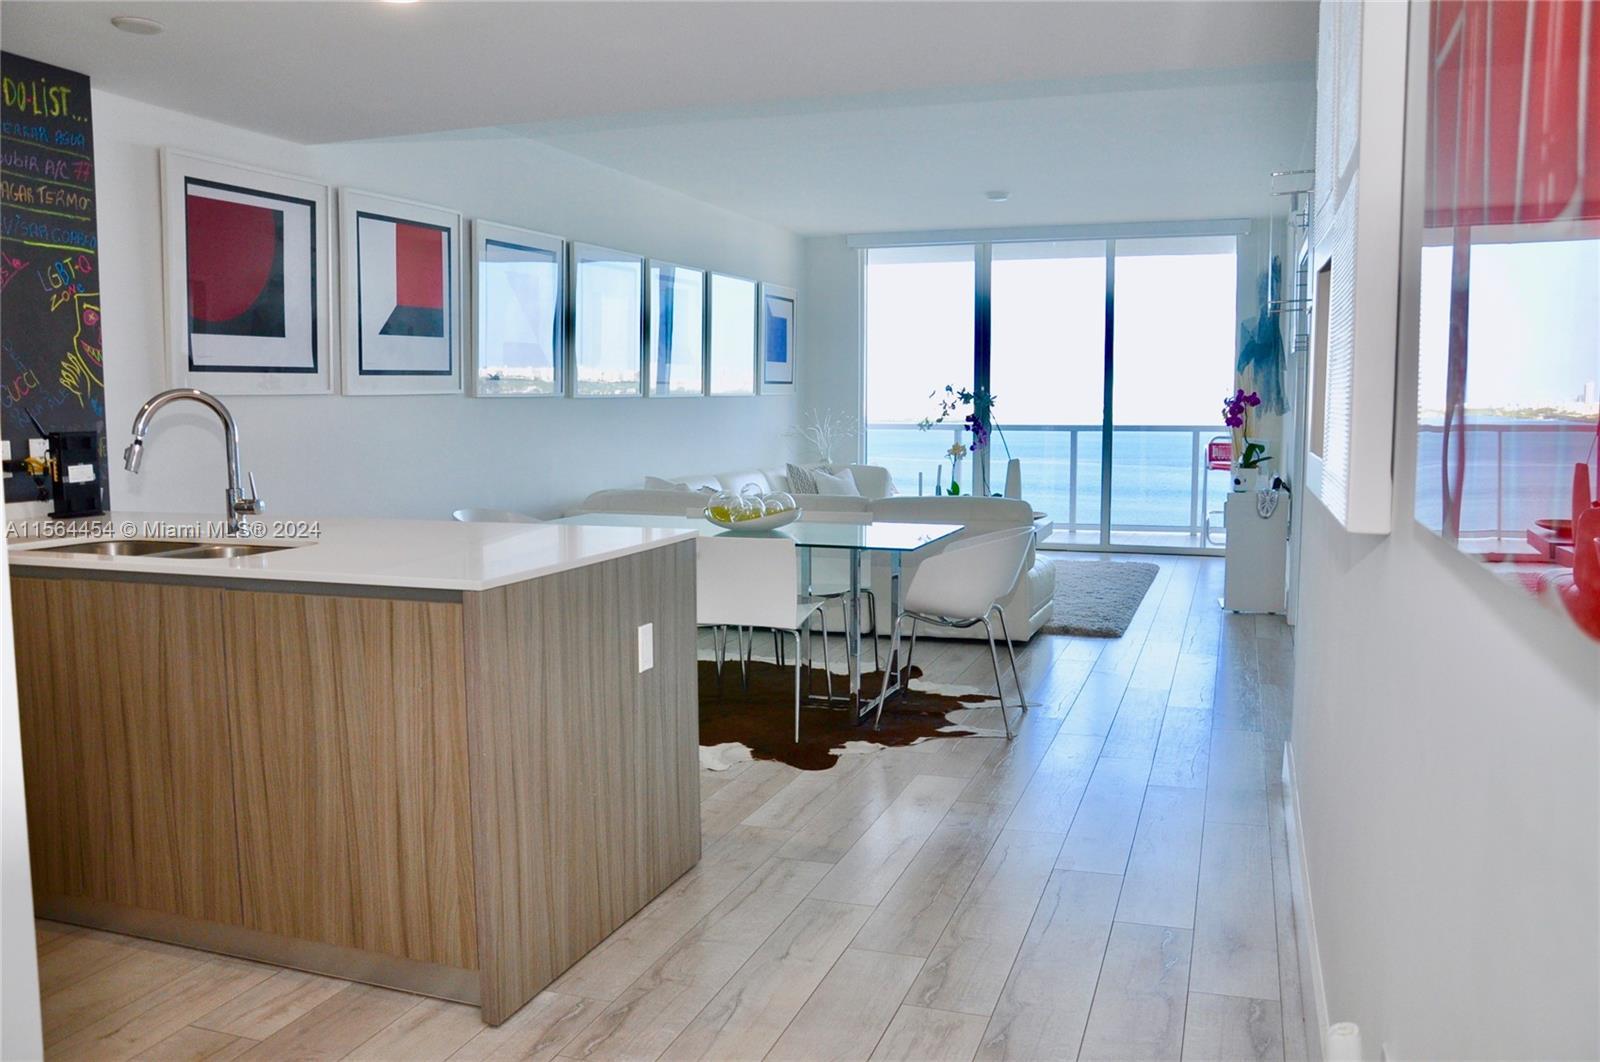 Luxury move-in ready 3 bedroom/3 bathroom condo with amazing open bay views, wood flooring throughou